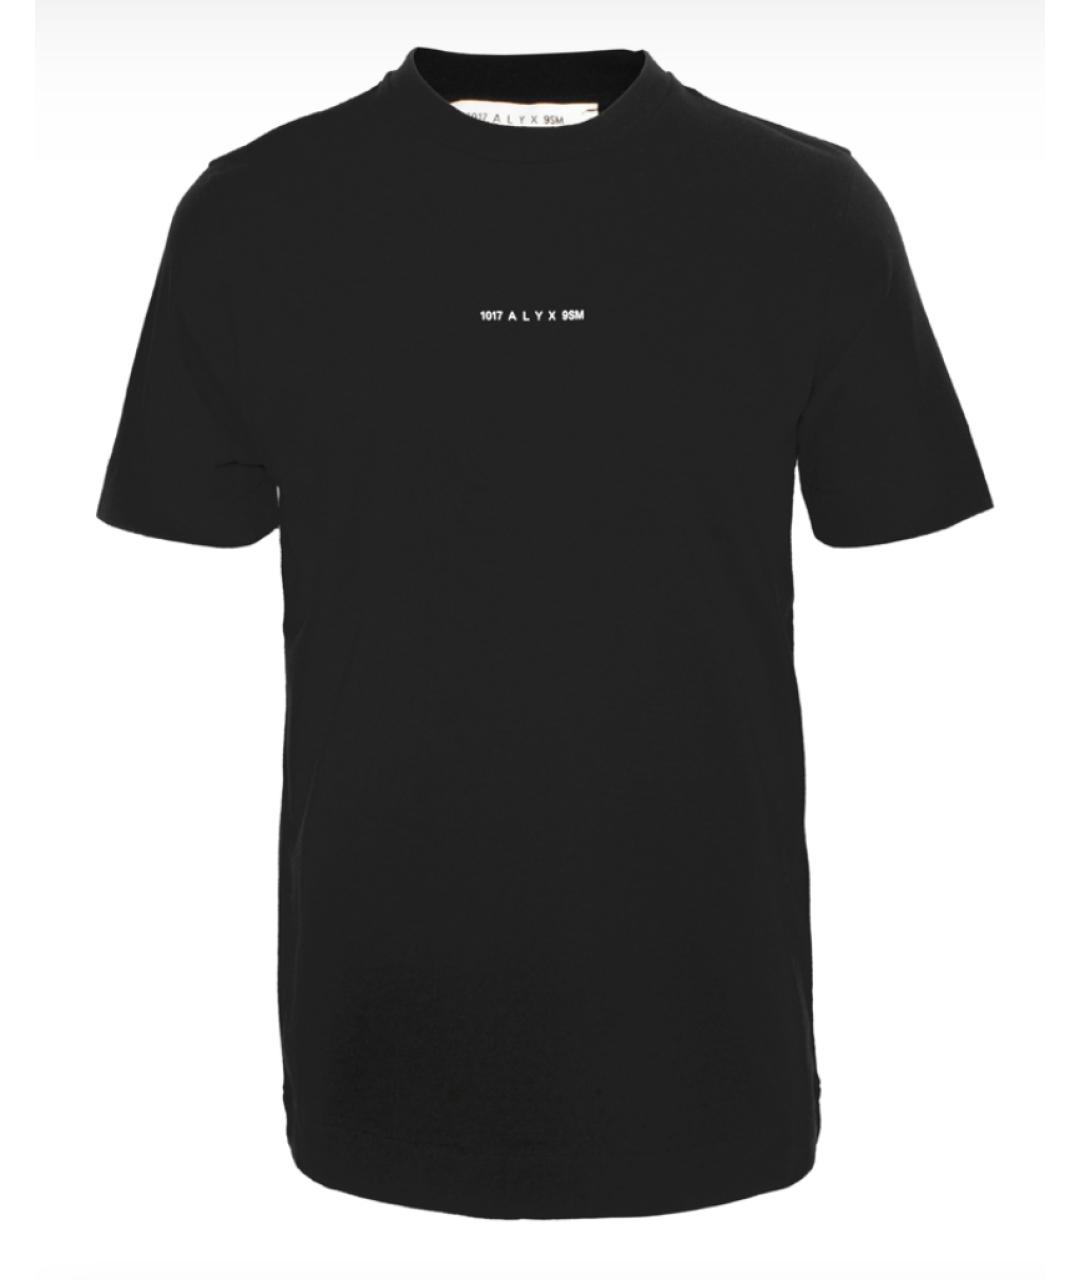 1017 ALYX 9SM Черная футболка, фото 1